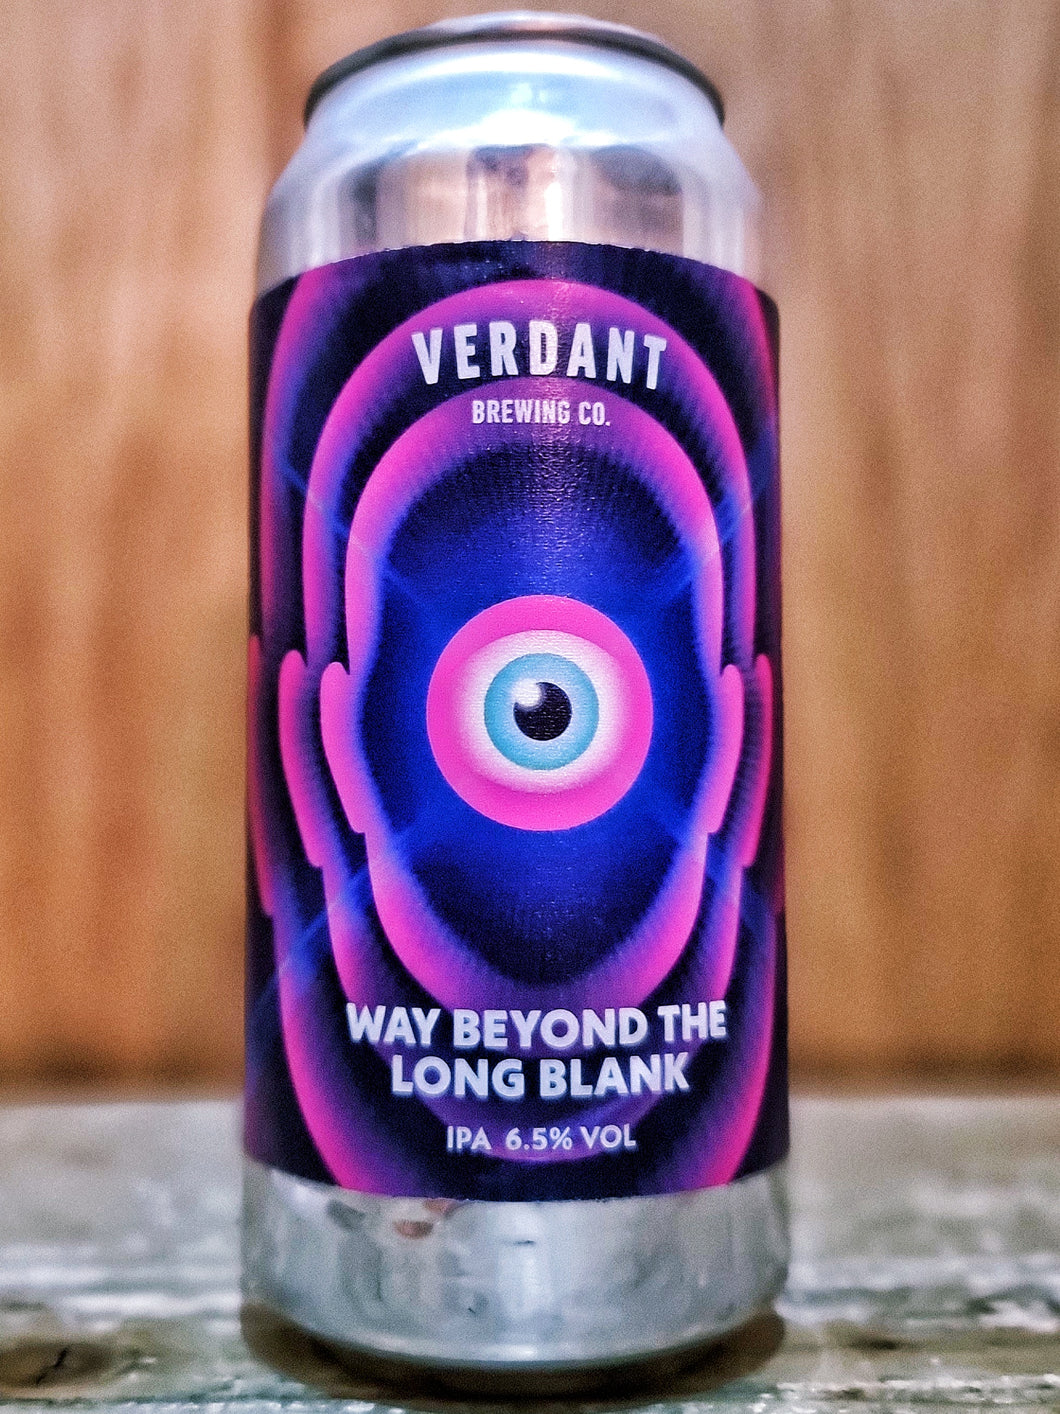 Verdant - Way Beyond The Long Blank